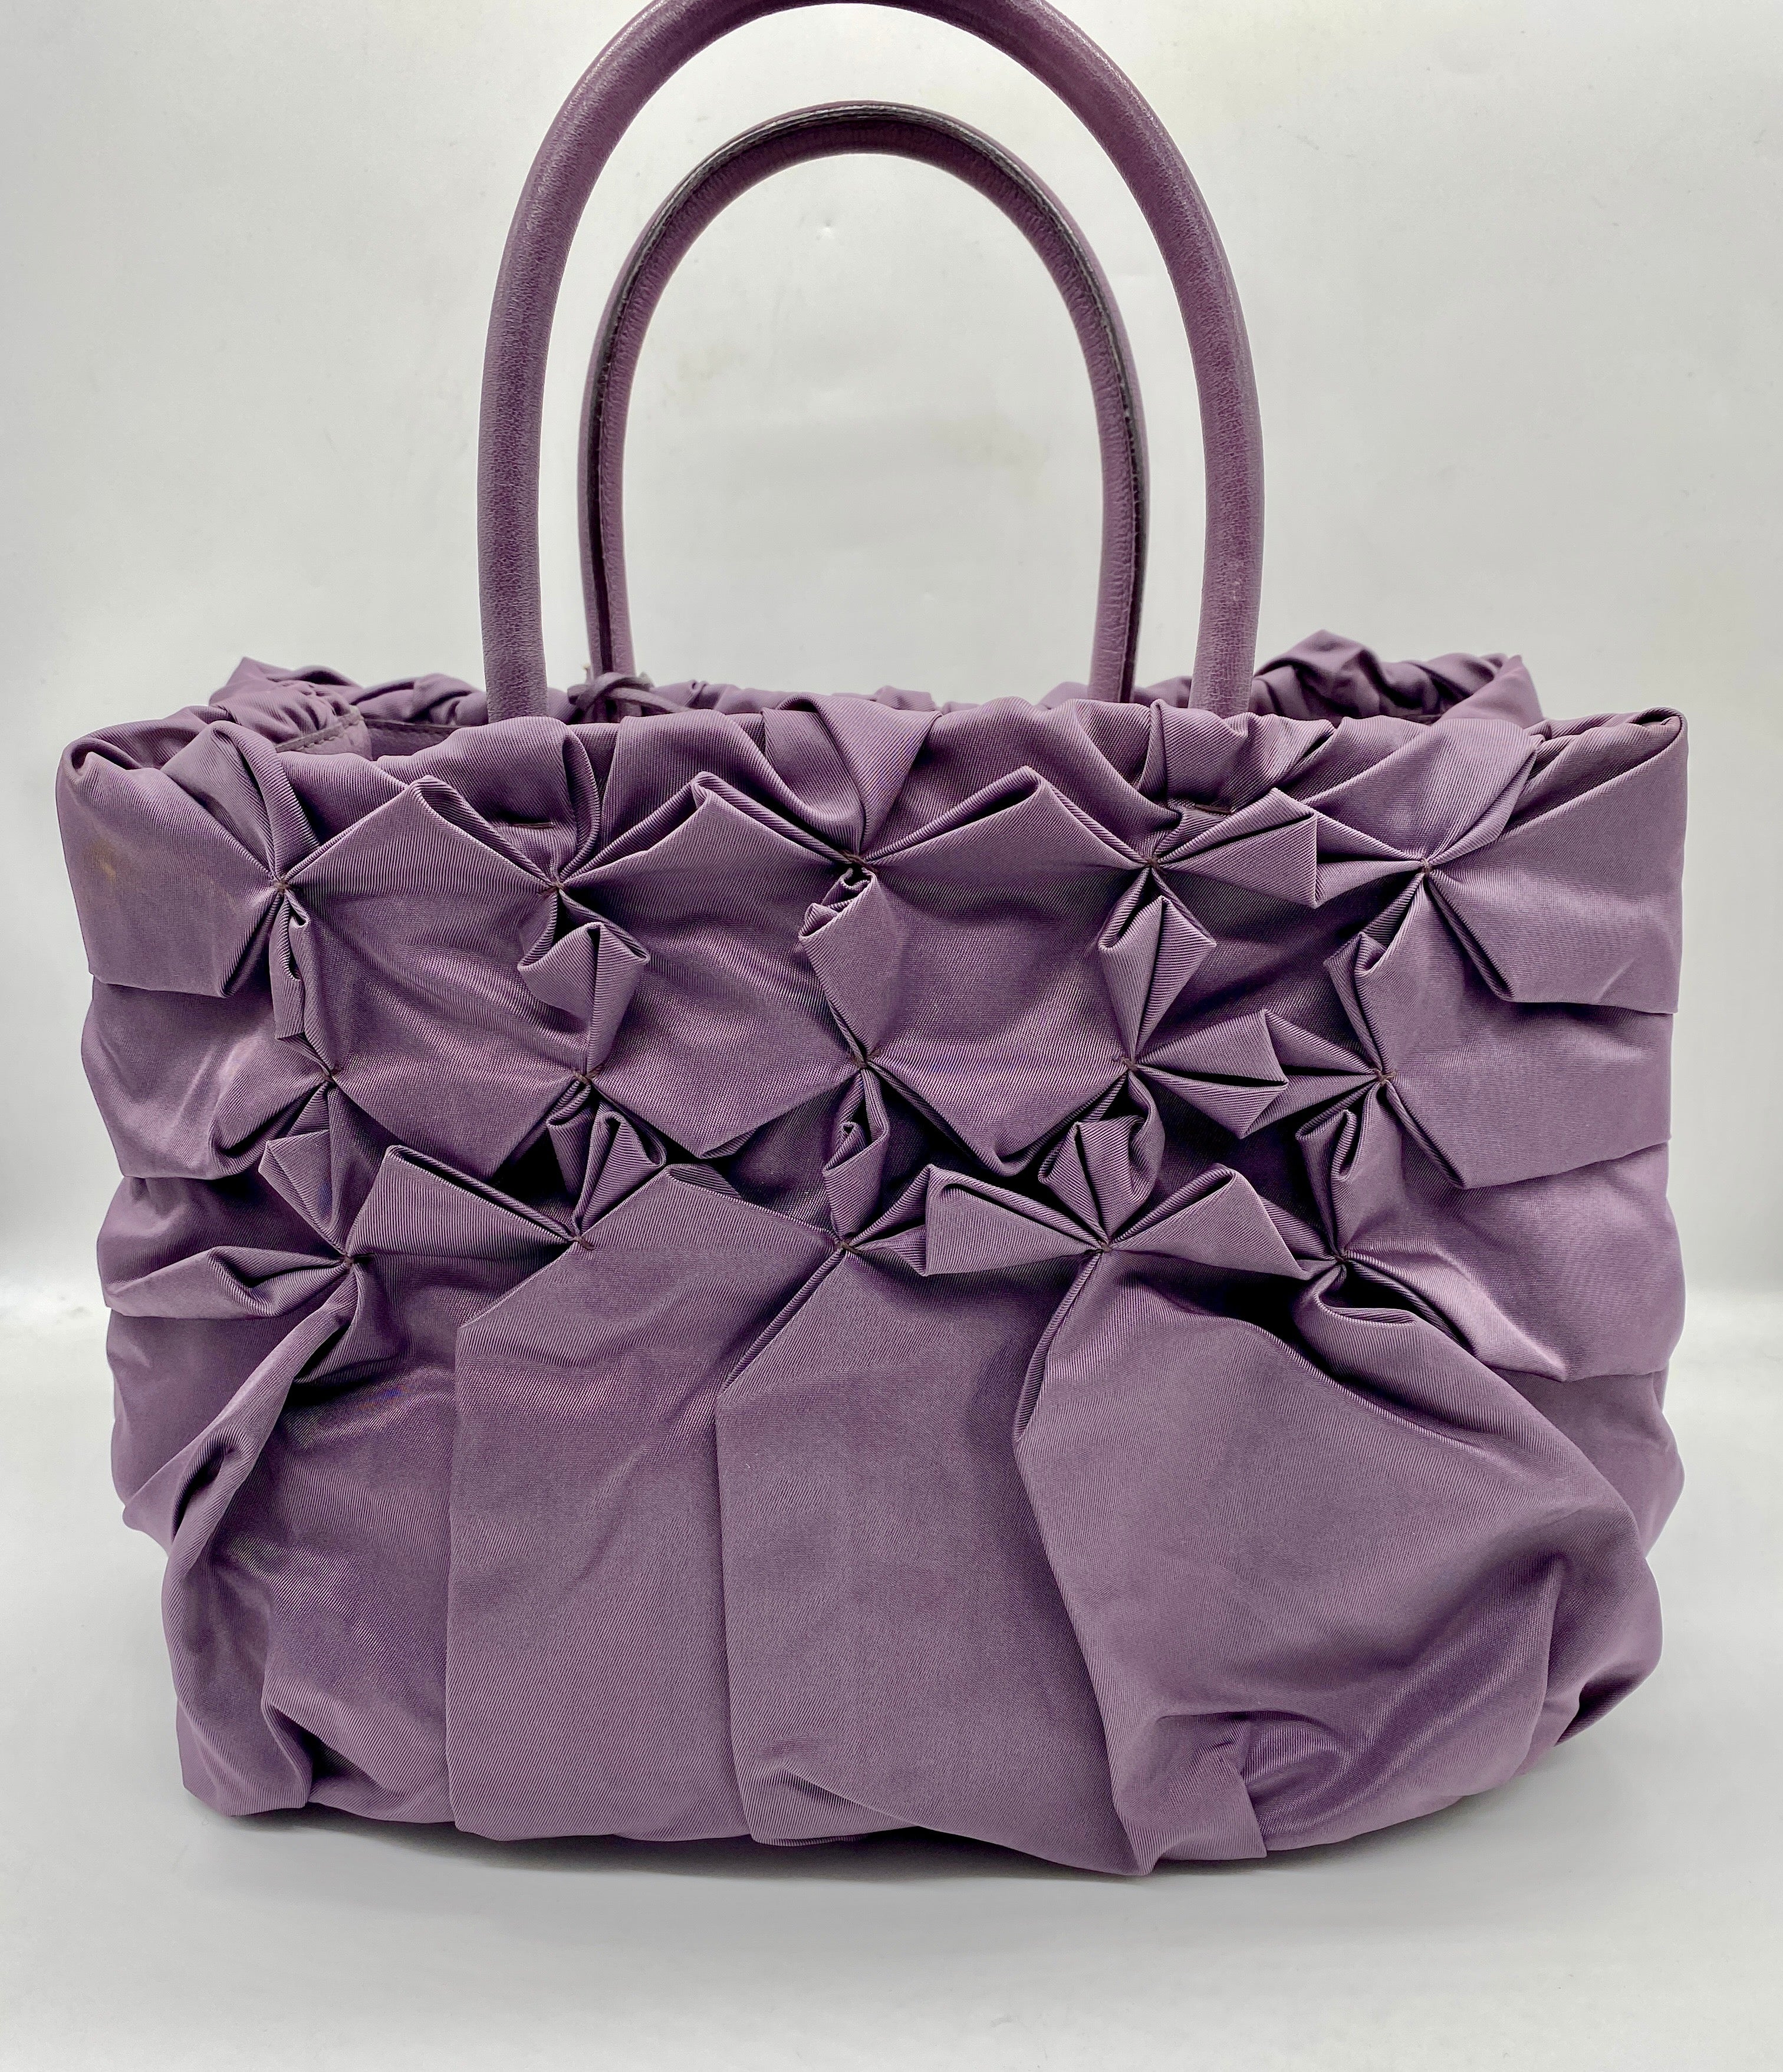 PRADA Handbag purple Viola Safiano from japan | eBay